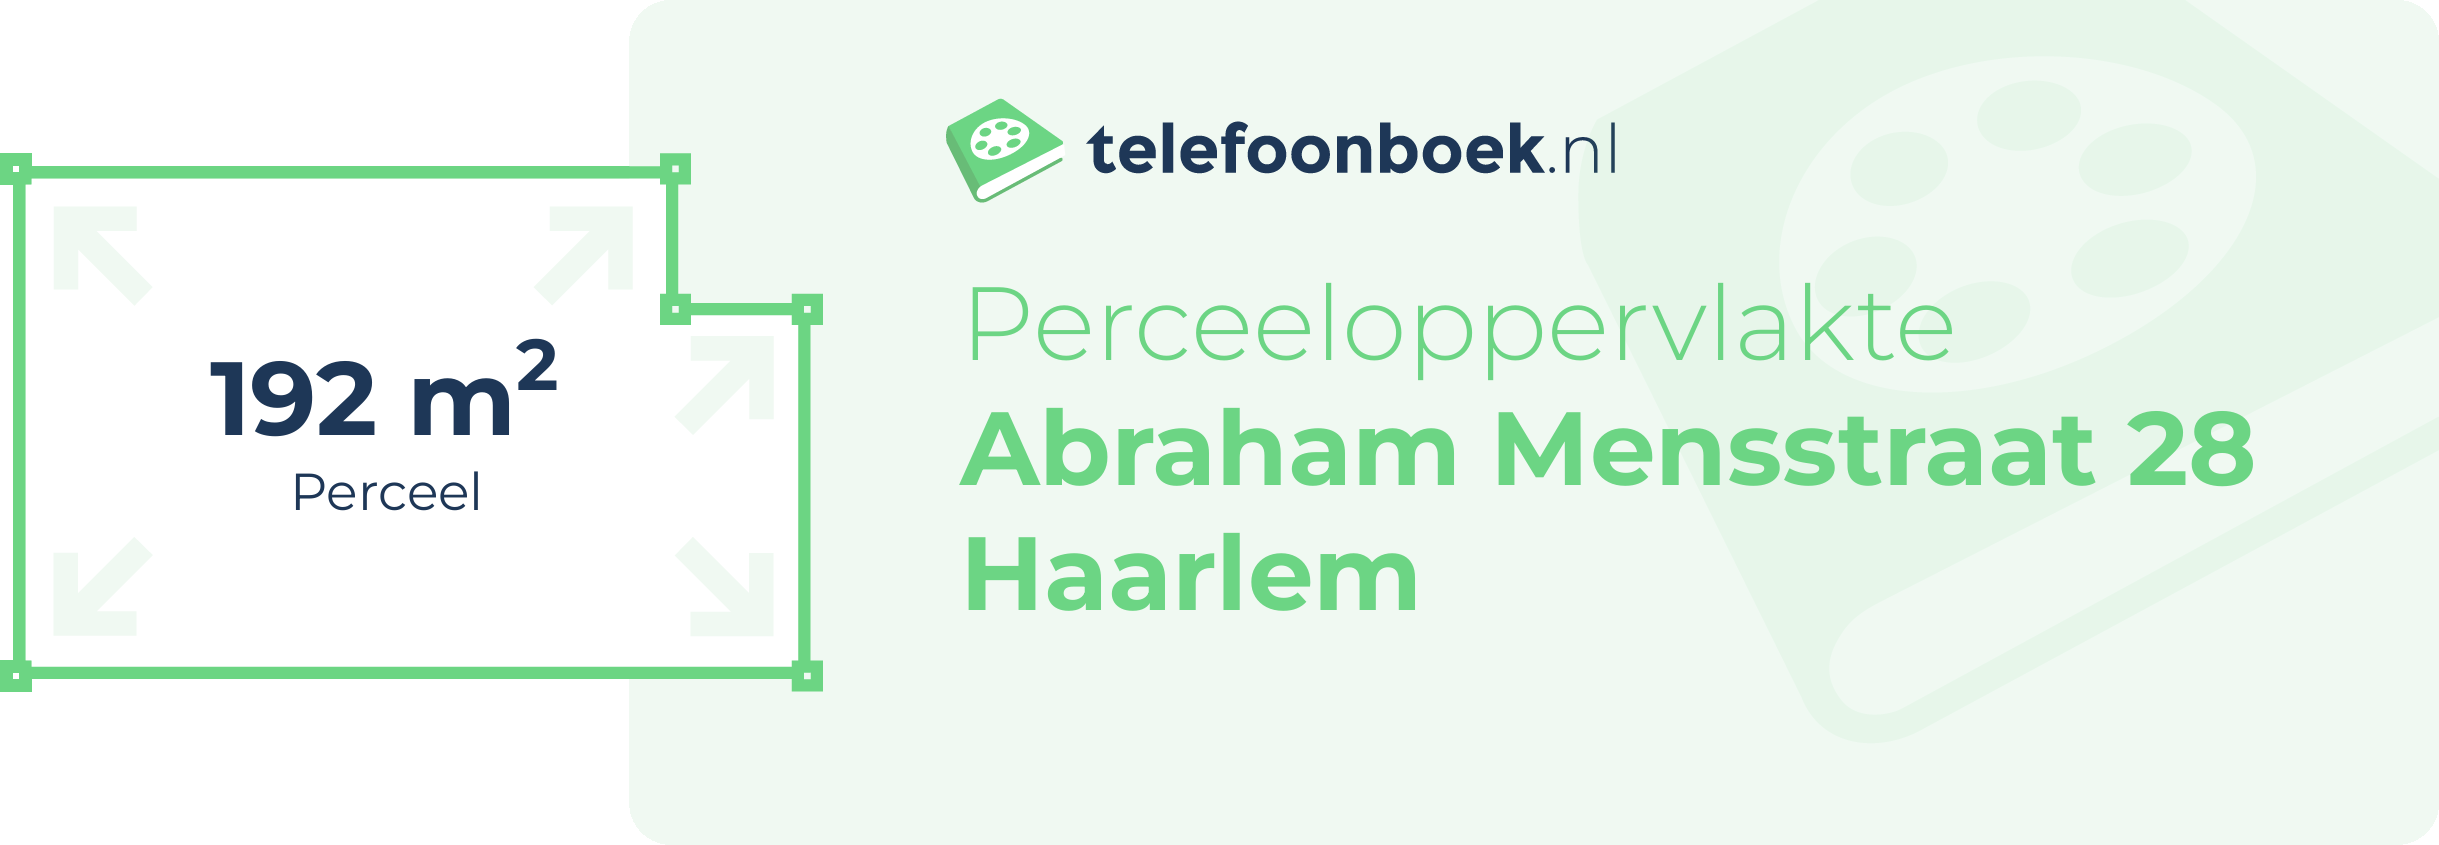 Perceeloppervlakte Abraham Mensstraat 28 Haarlem